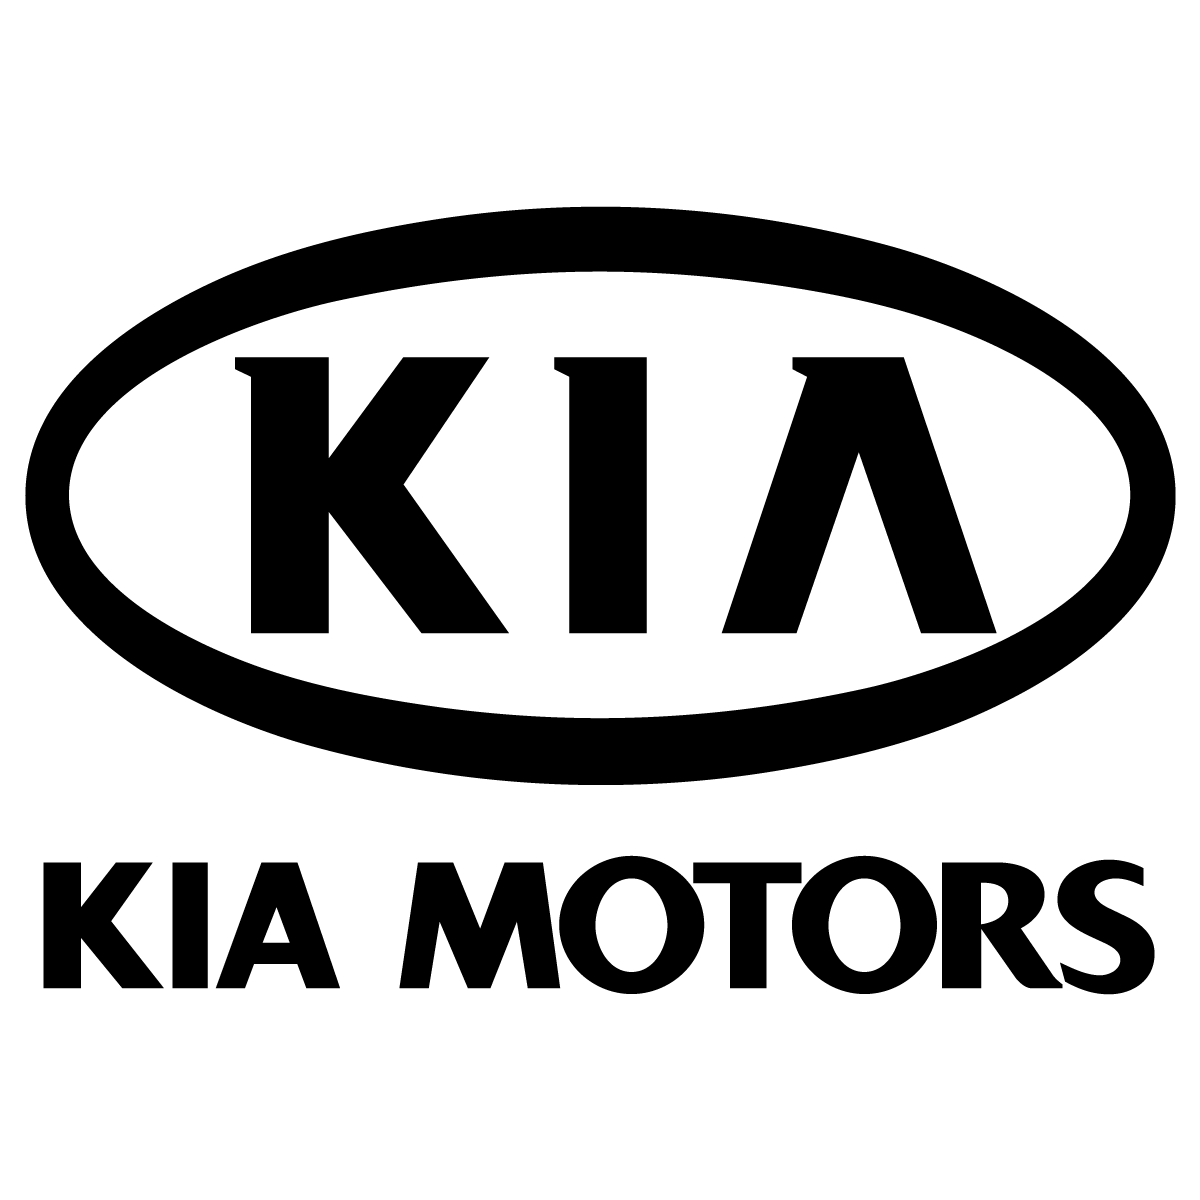 KIA Motors Logo Vector. Baby photo. Kia motors, Motor